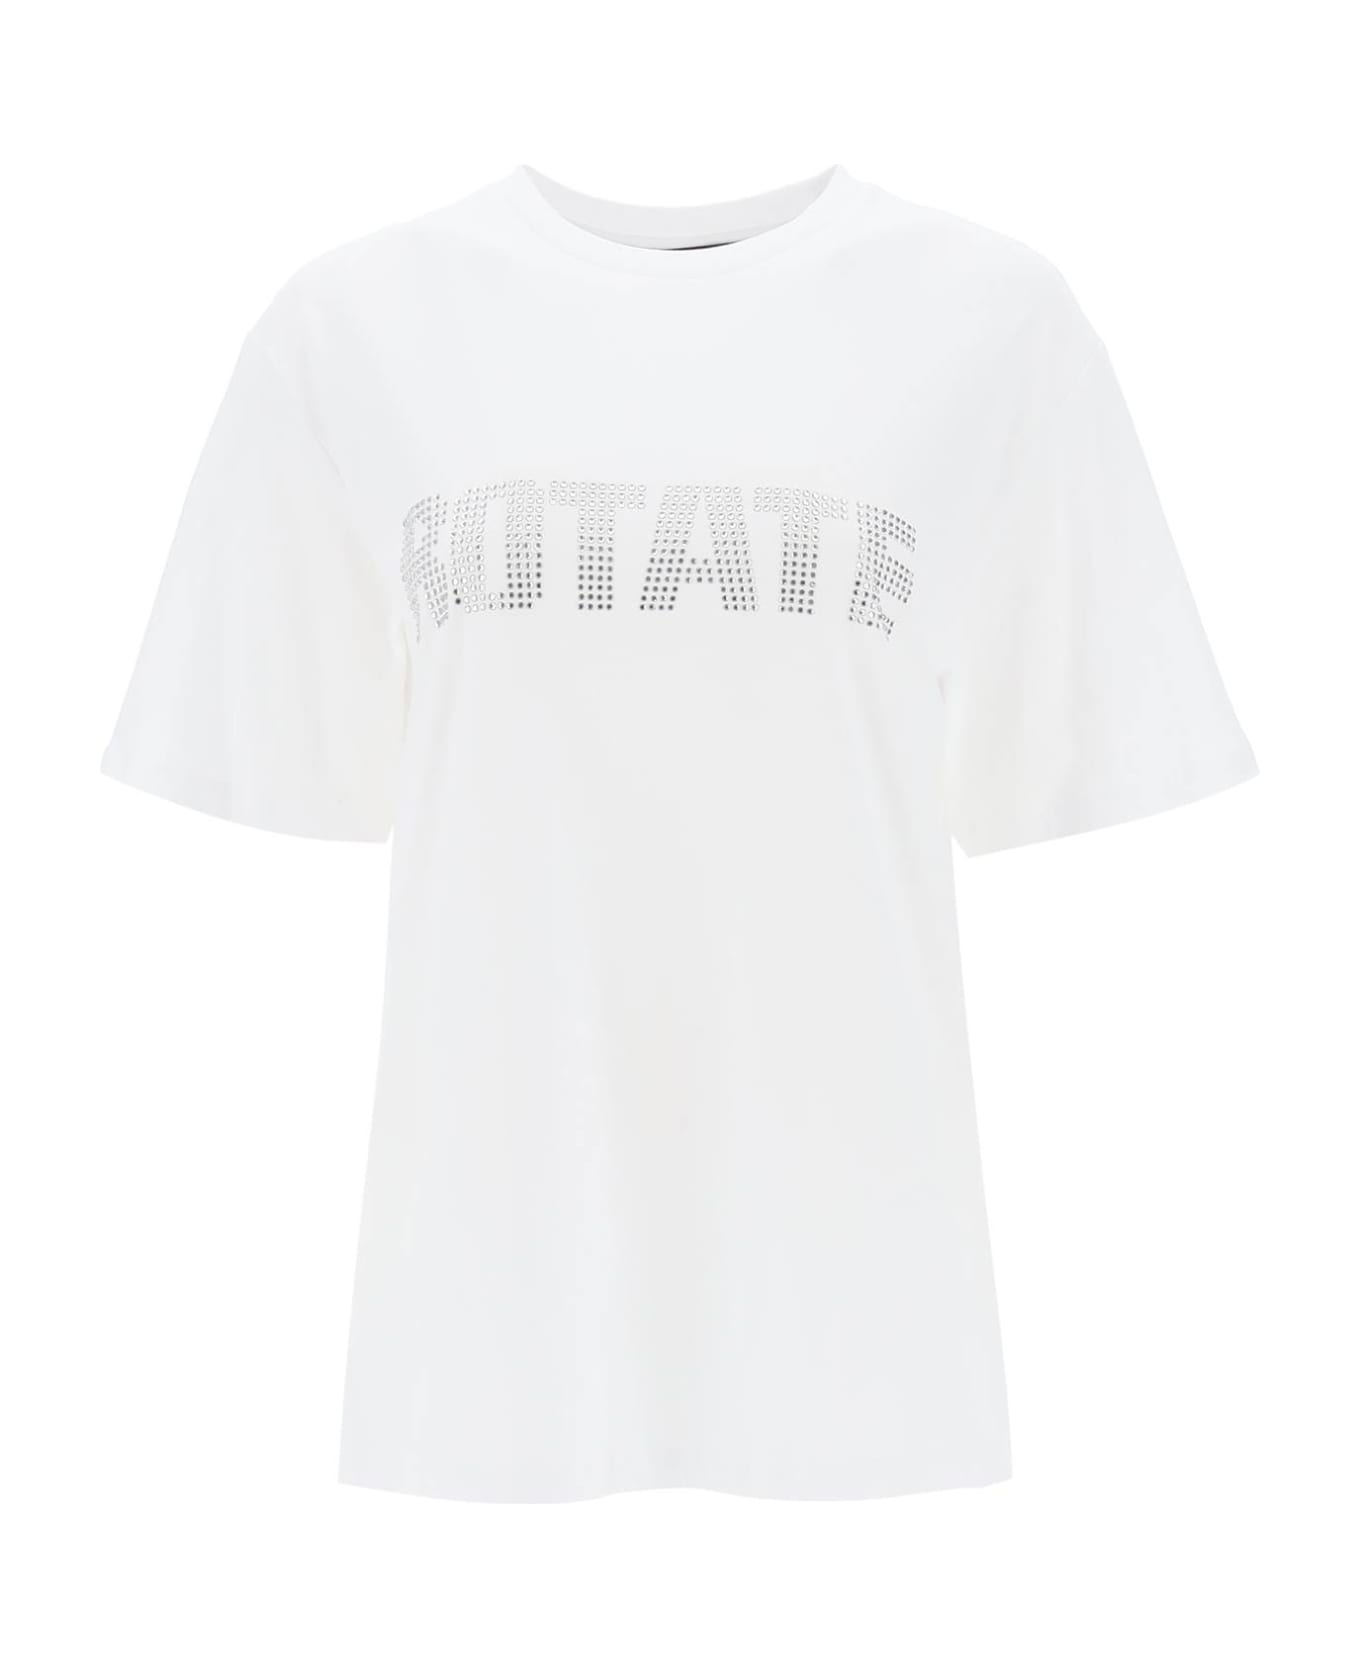 Rotate by Birger Christensen Rotate T-shirt - BRIGHT WHITE (White) Tシャツ